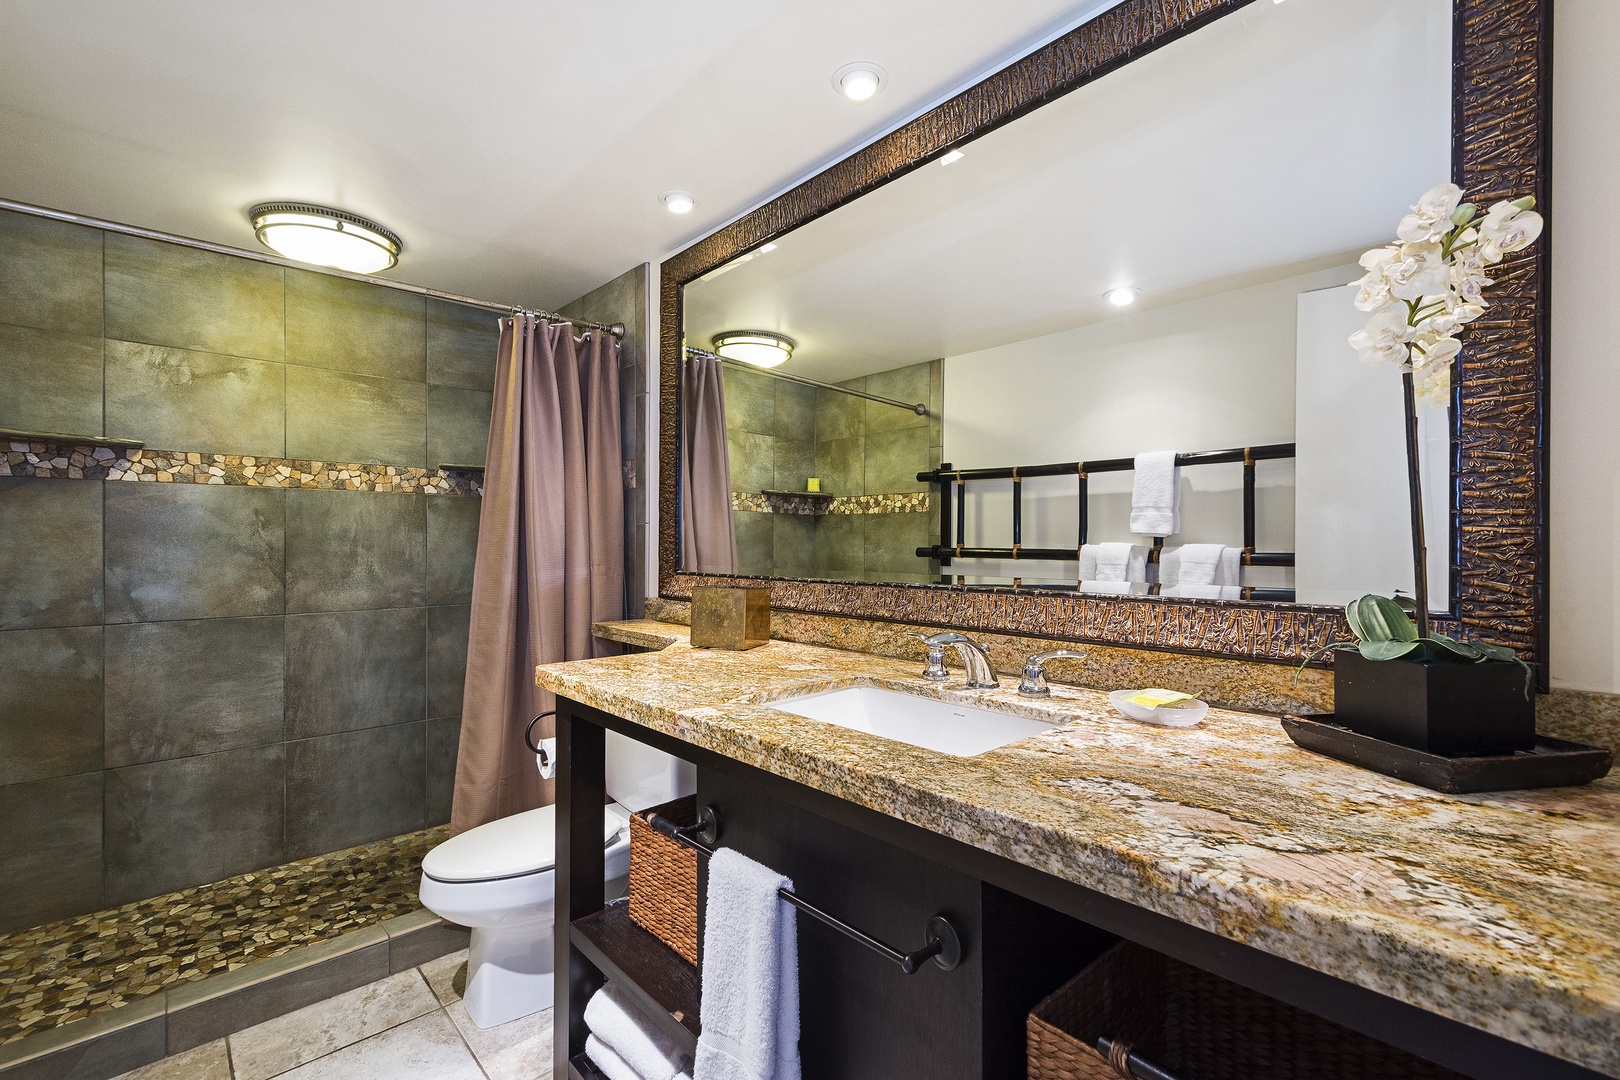 Kailua Kona Vacation Rentals, Kona Makai 4104 - Upgraded bathroom with large tiled shower.